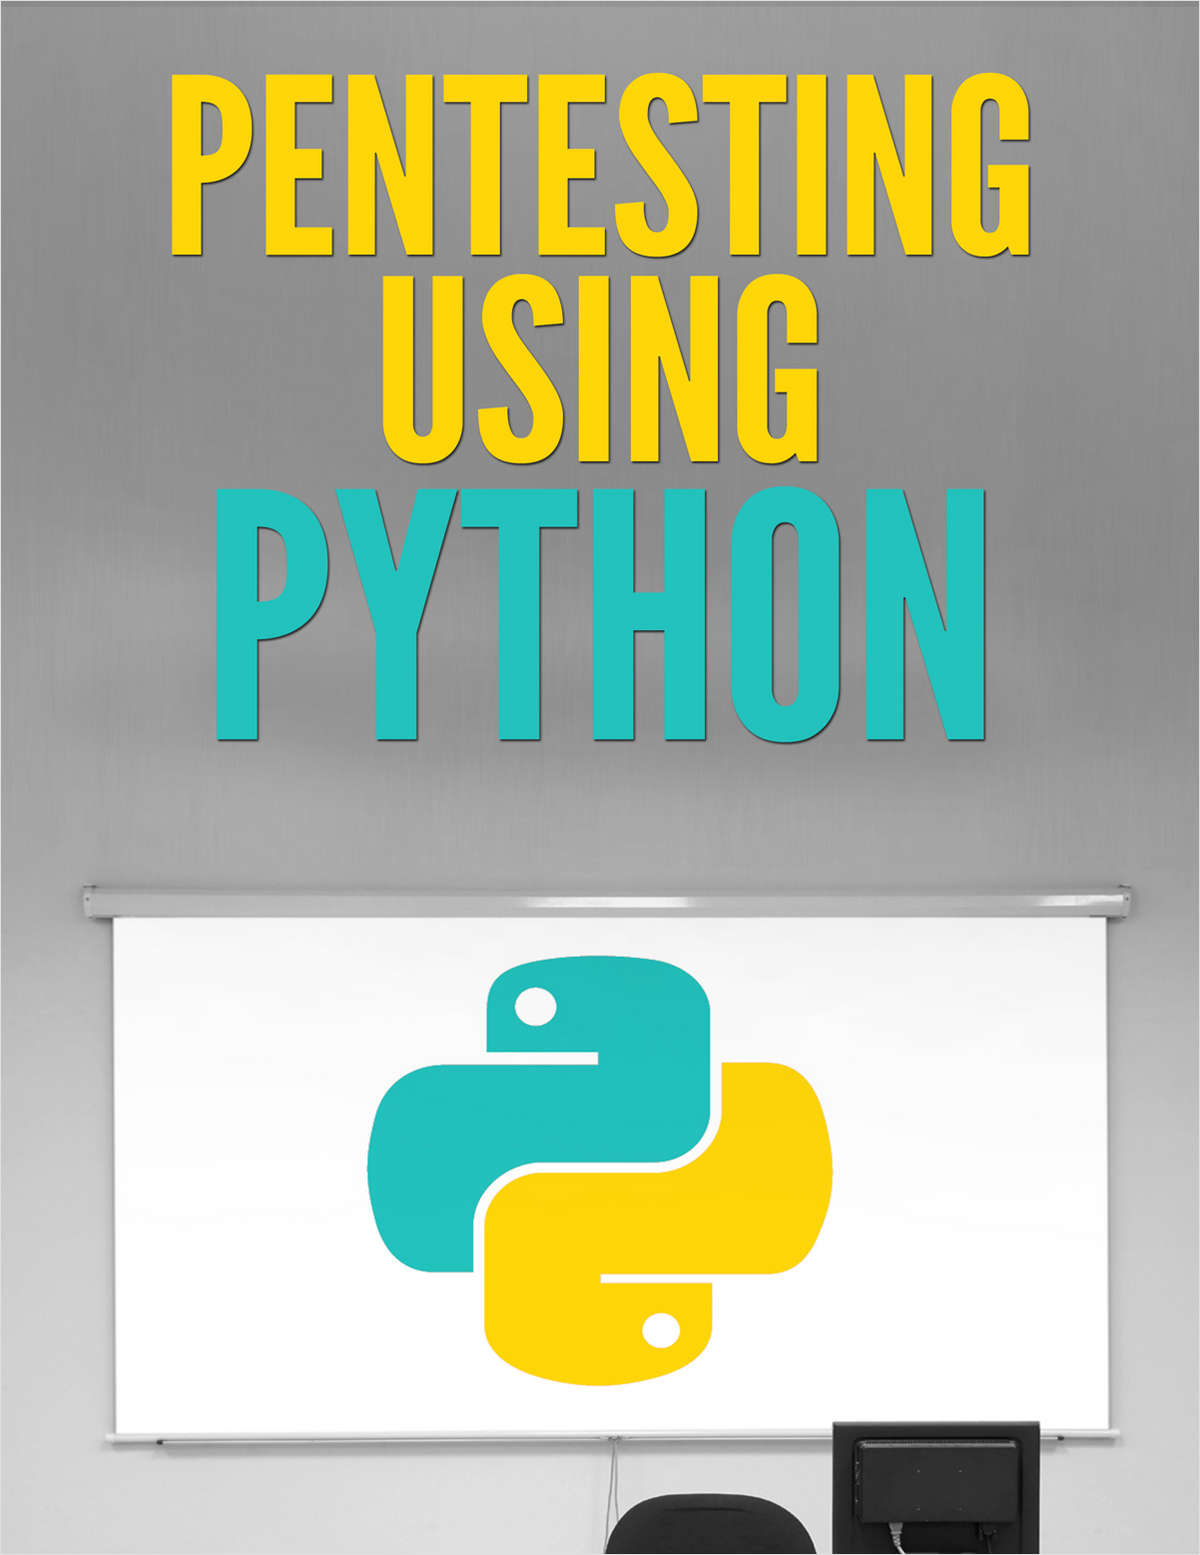 Pentesting Using Python